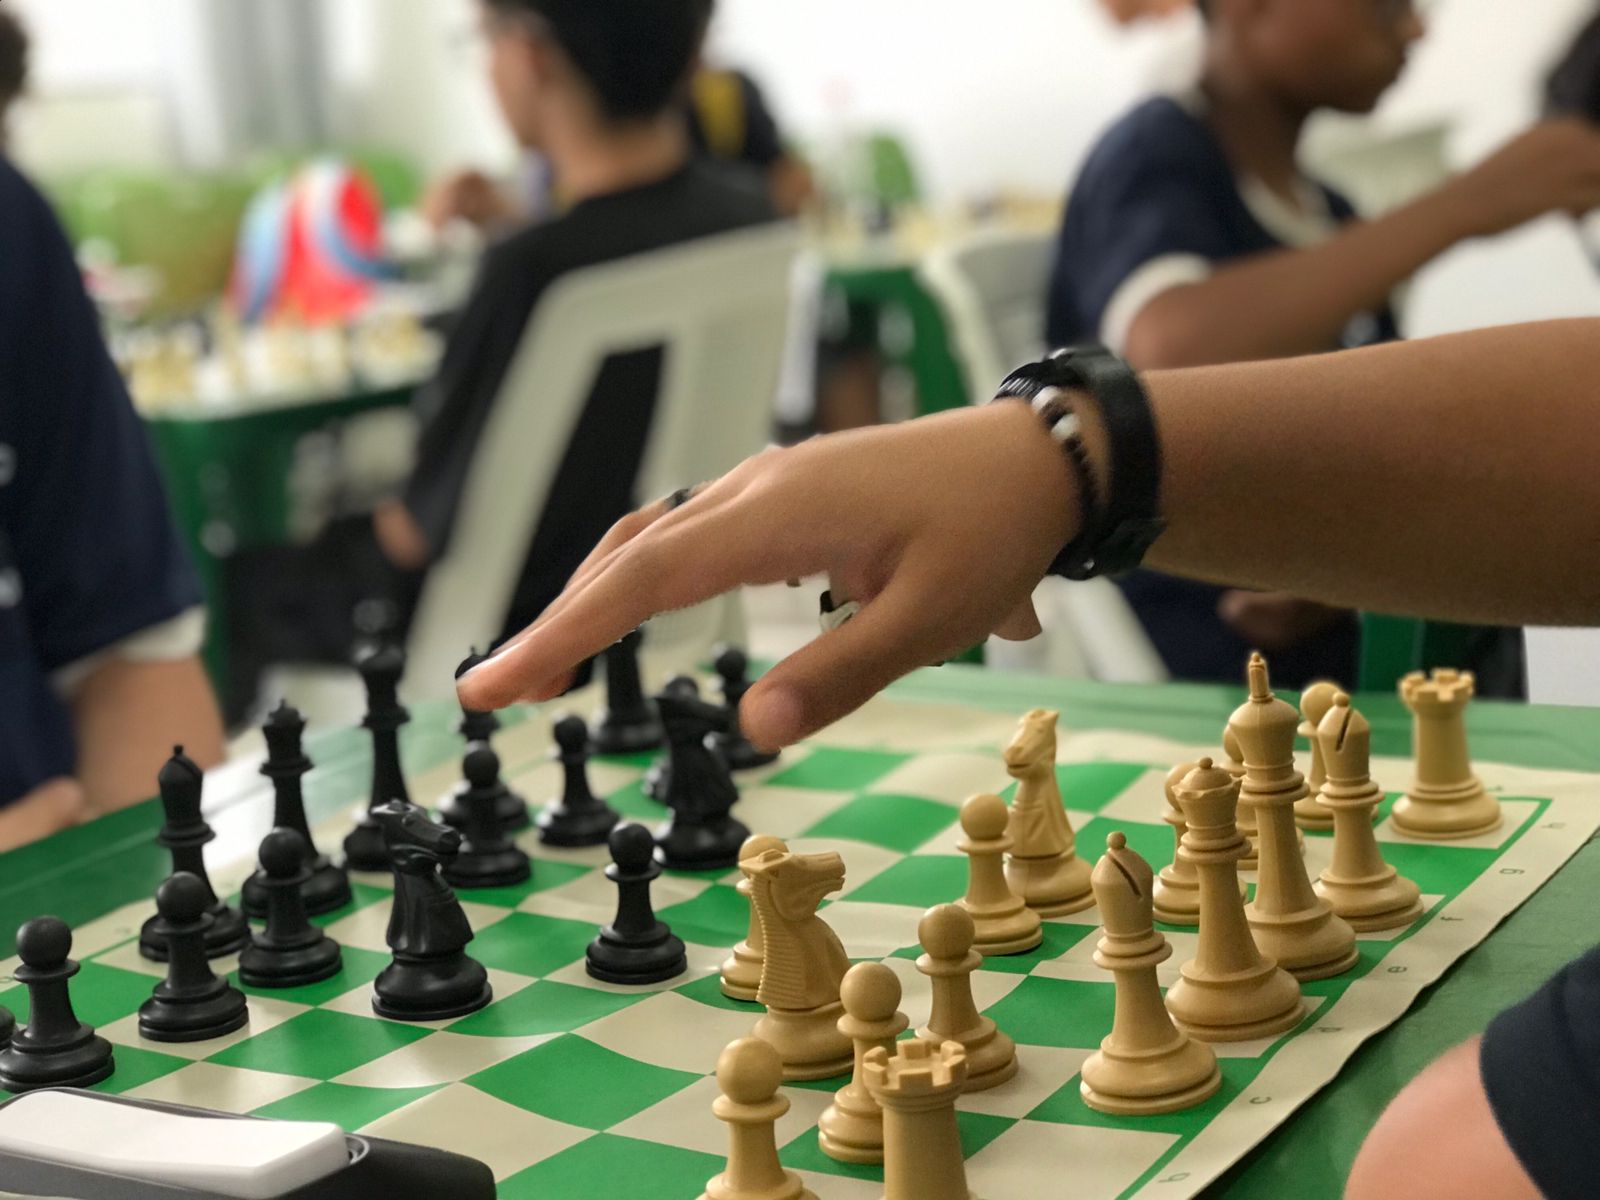 Campus promove Torneio de Xadrez aberto ao público - Campus Farroupilha